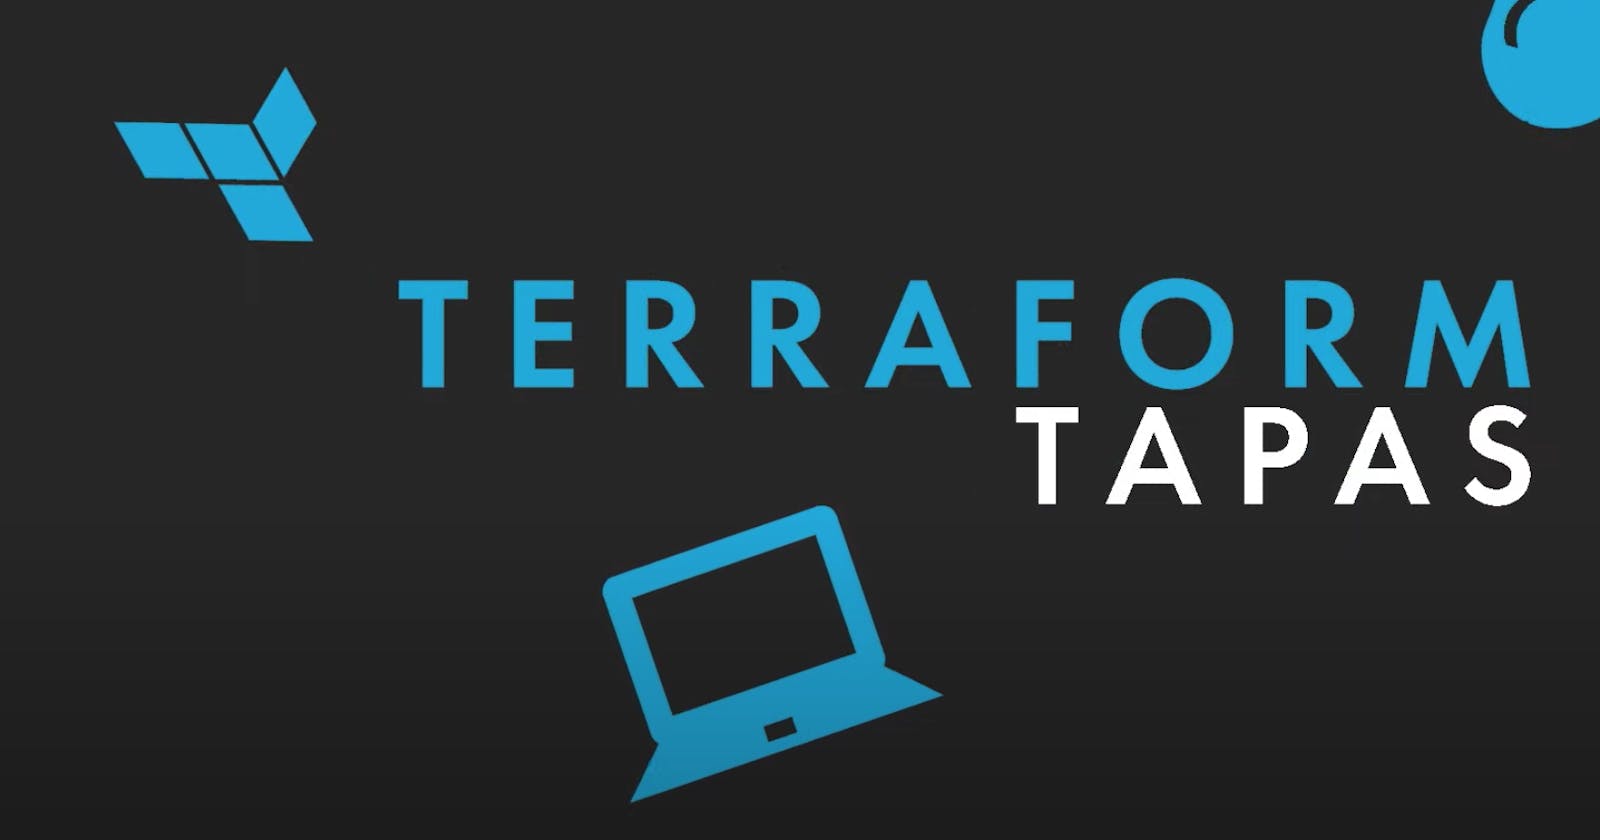 Introducing Terraform Tapas